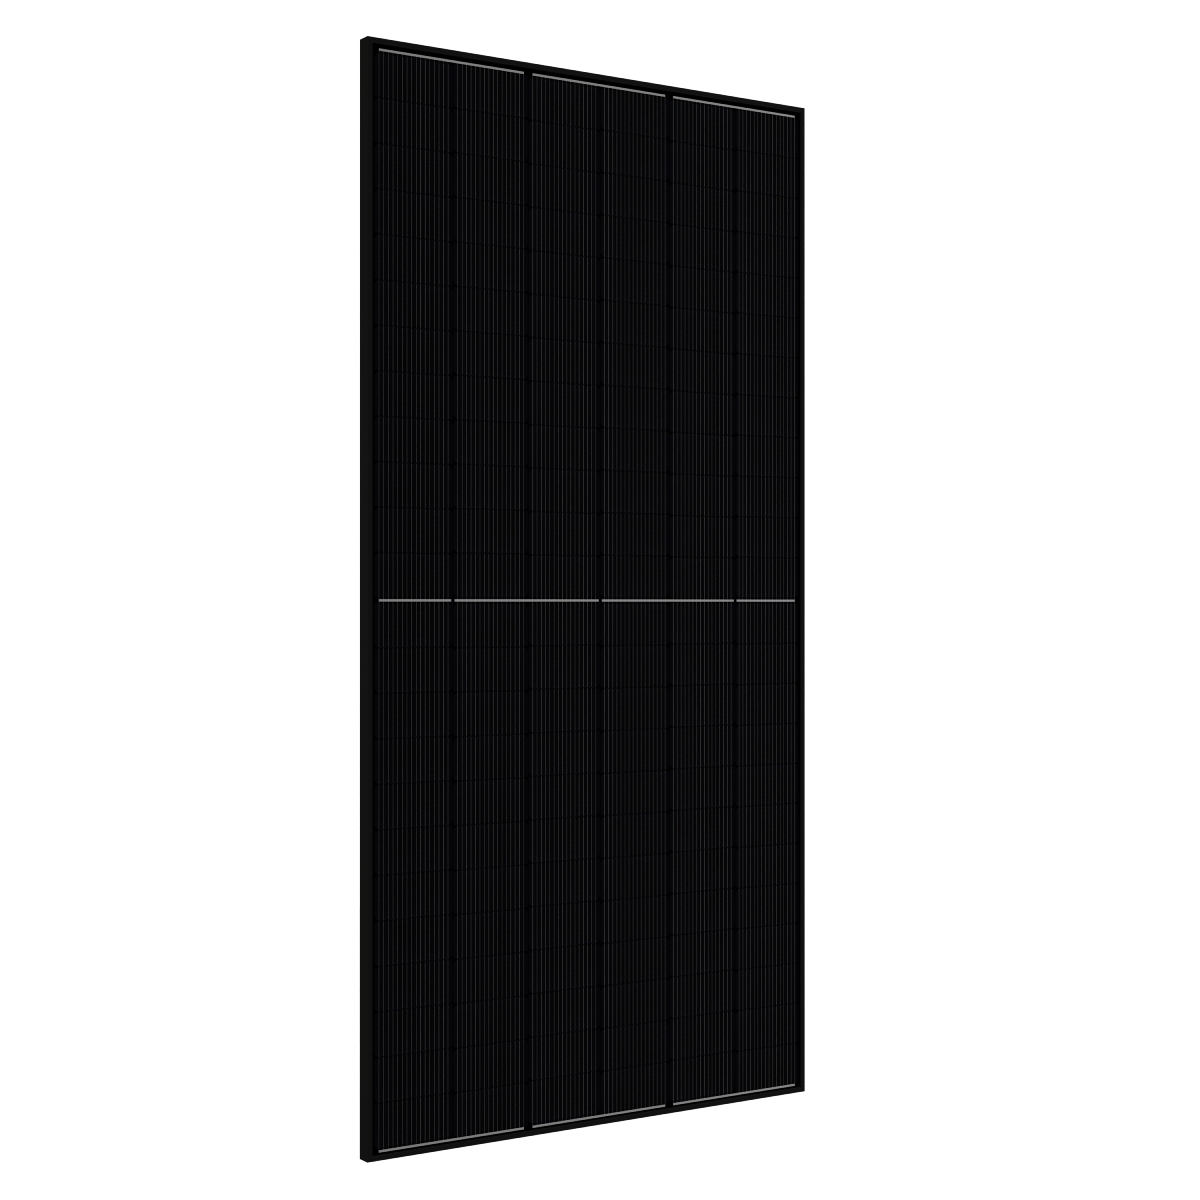 TommaTech 595Wp 144TNFB M10 Topcon Dark Series Solar Panel